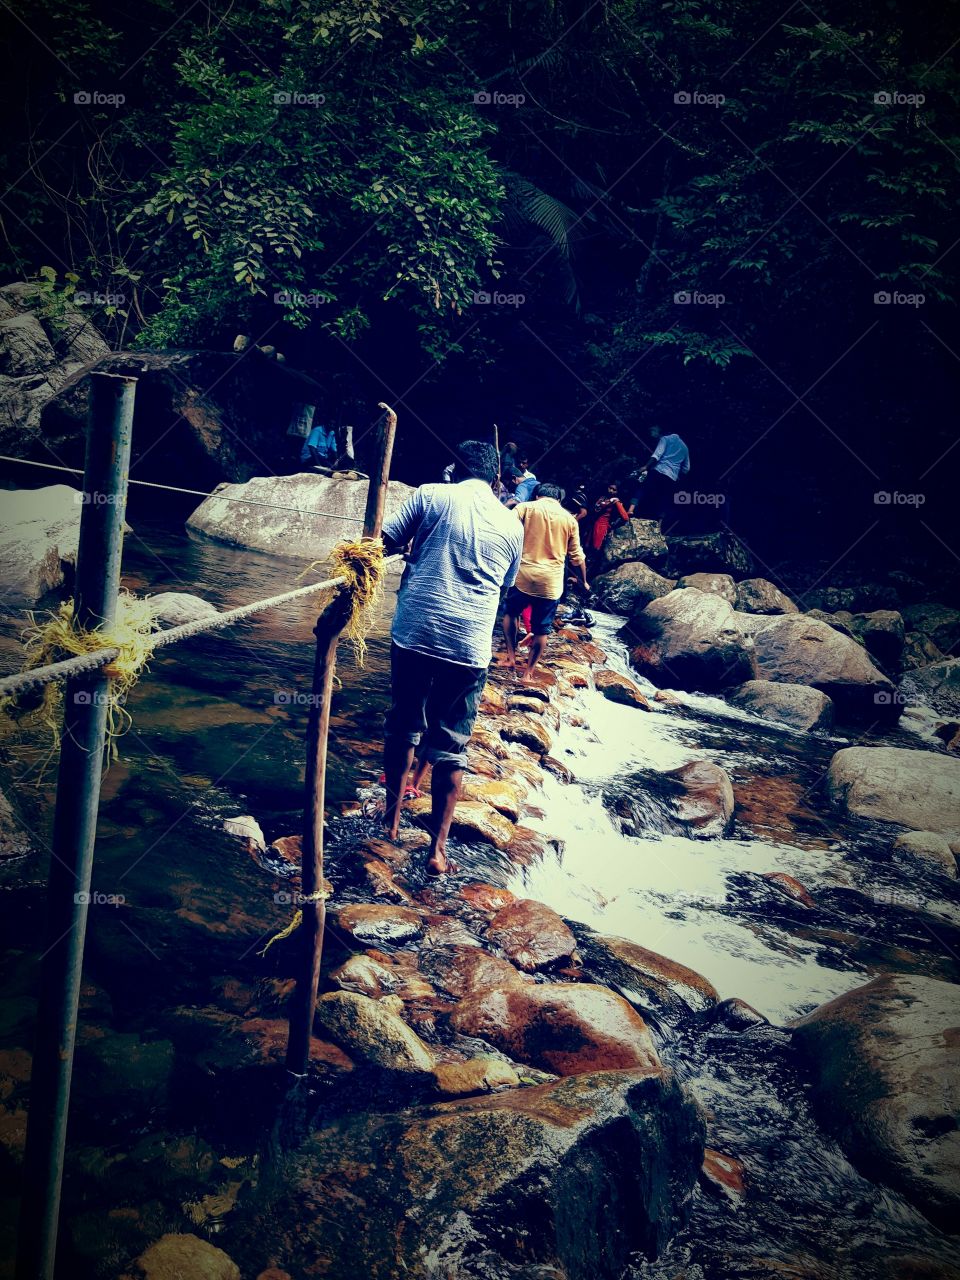 Crossing the Creek at Meenmutti Waterfalls